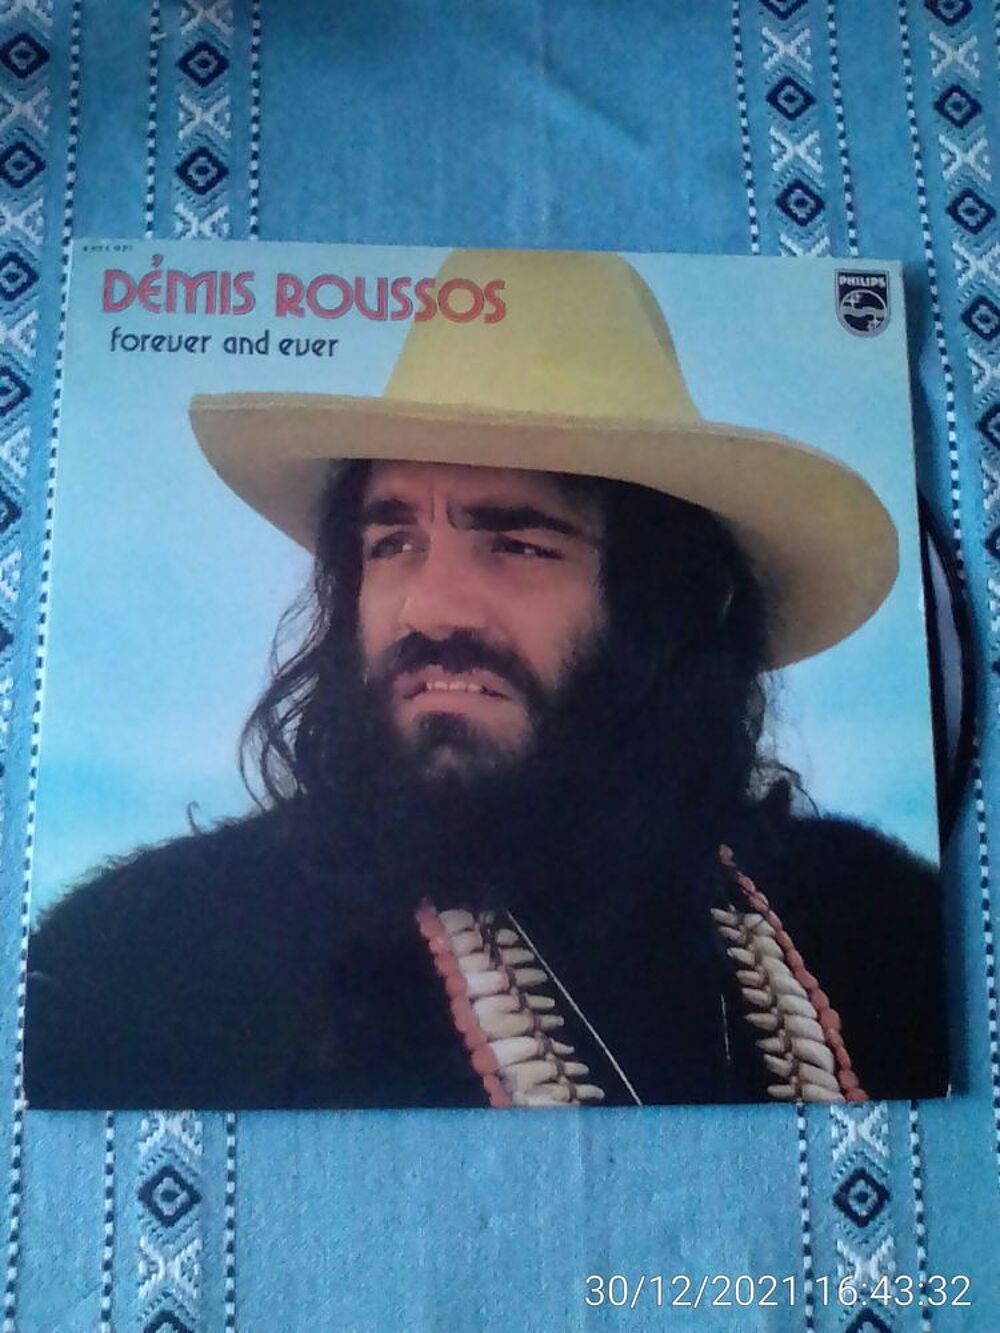 Vinyle 33T FOREVER AND EVER-DEMIS ROUSSOS CD et vinyles